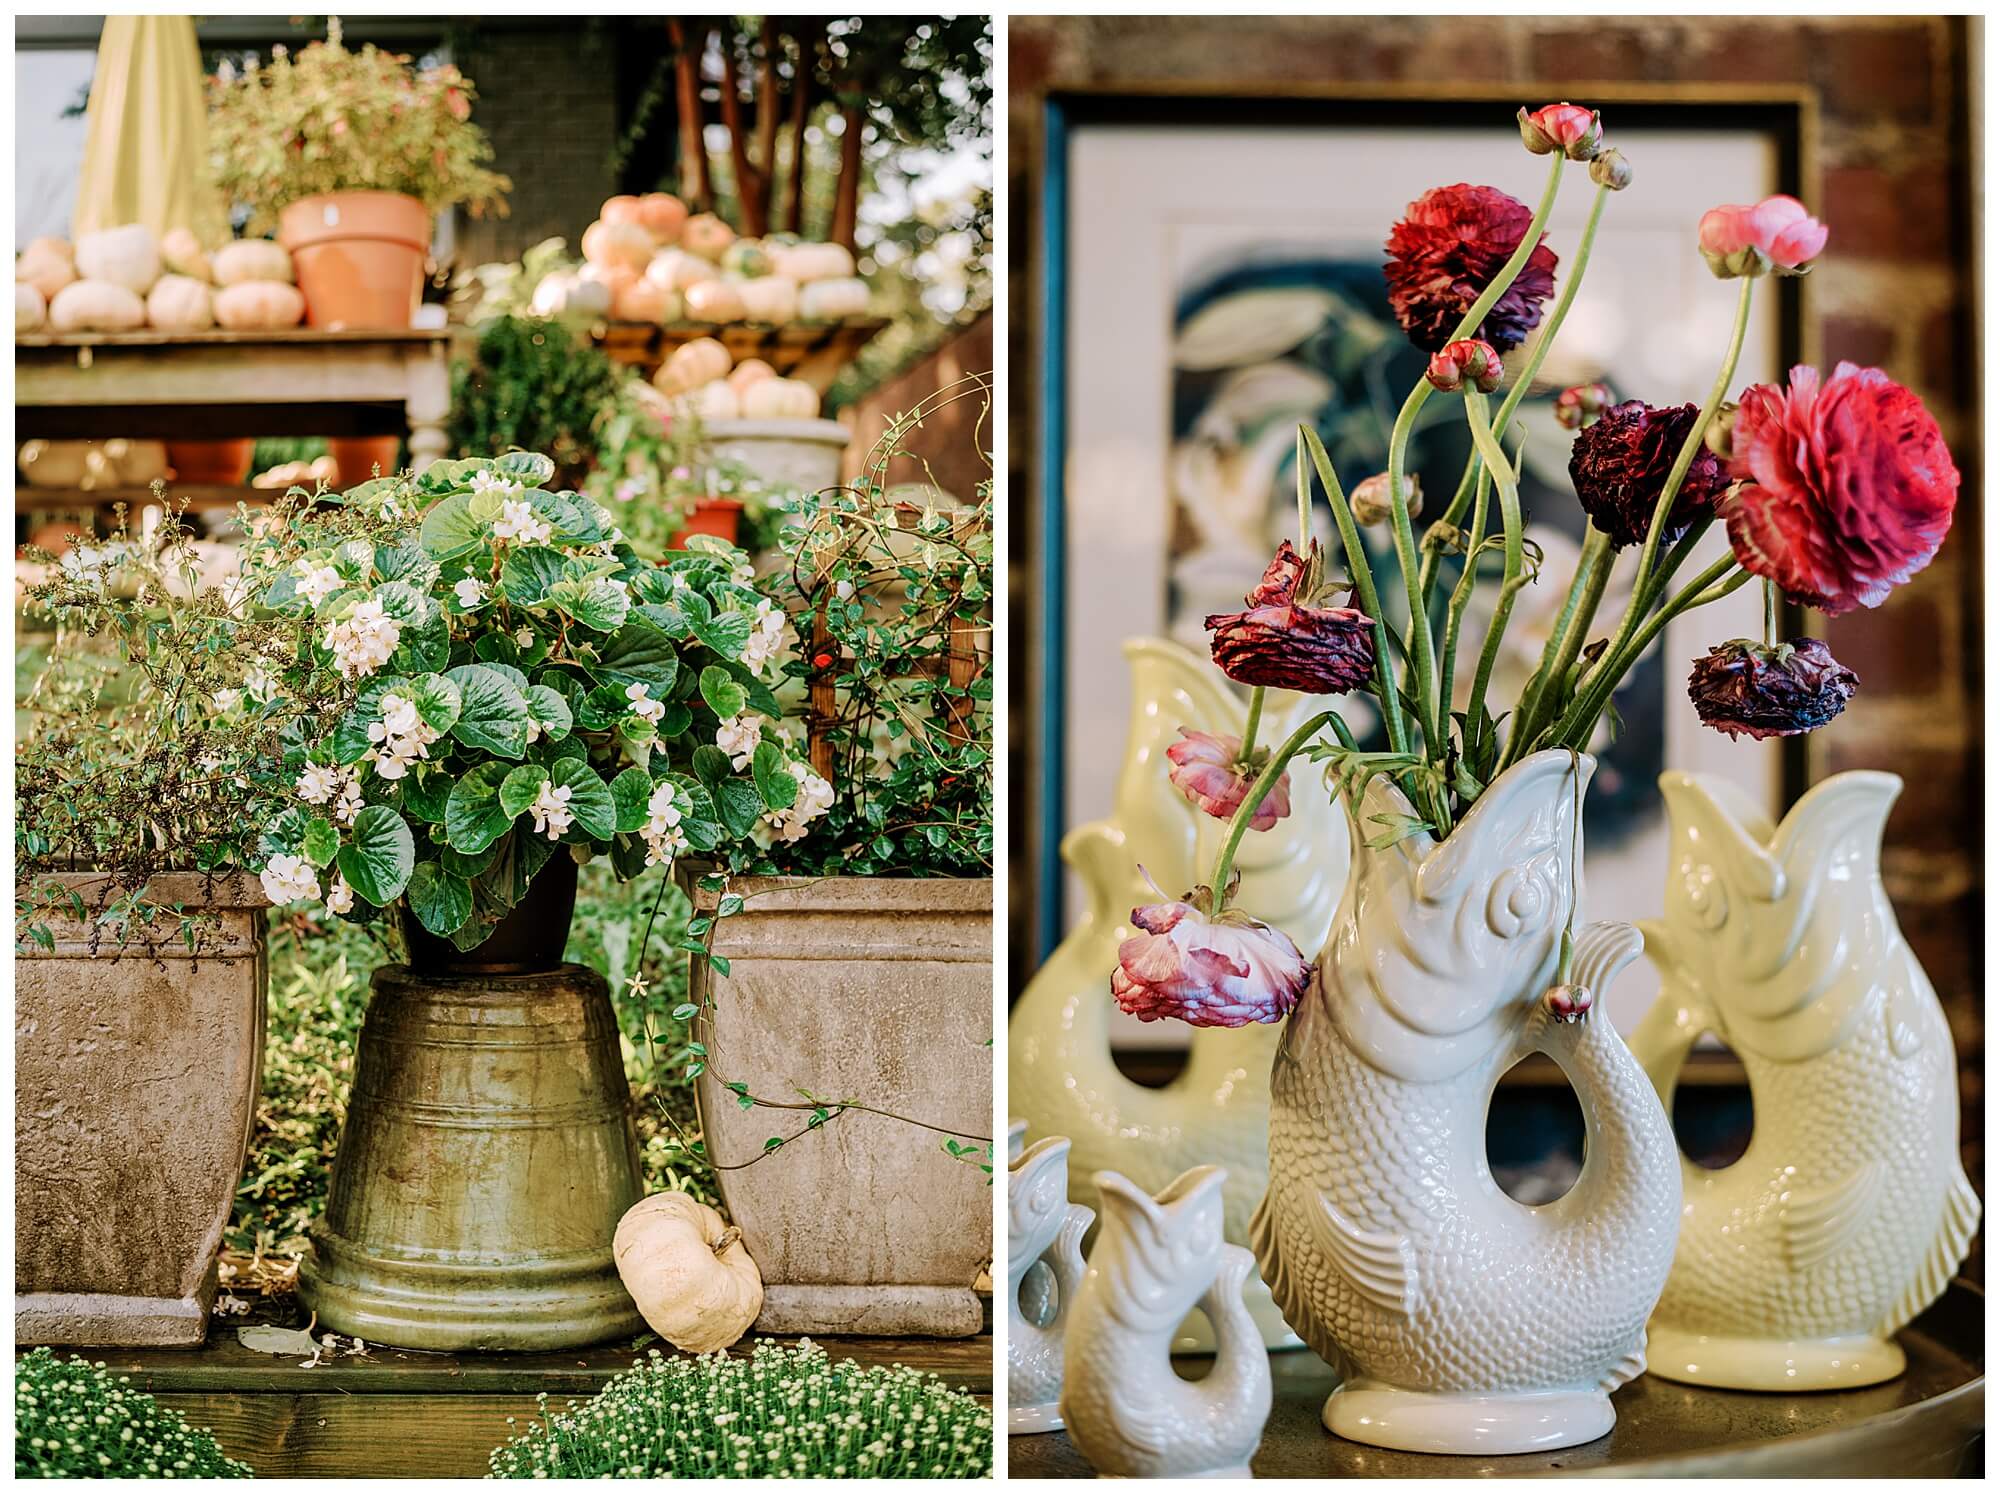 left: plants at Shoppe Birmingham right: fish-shaped vases at General Birmingham